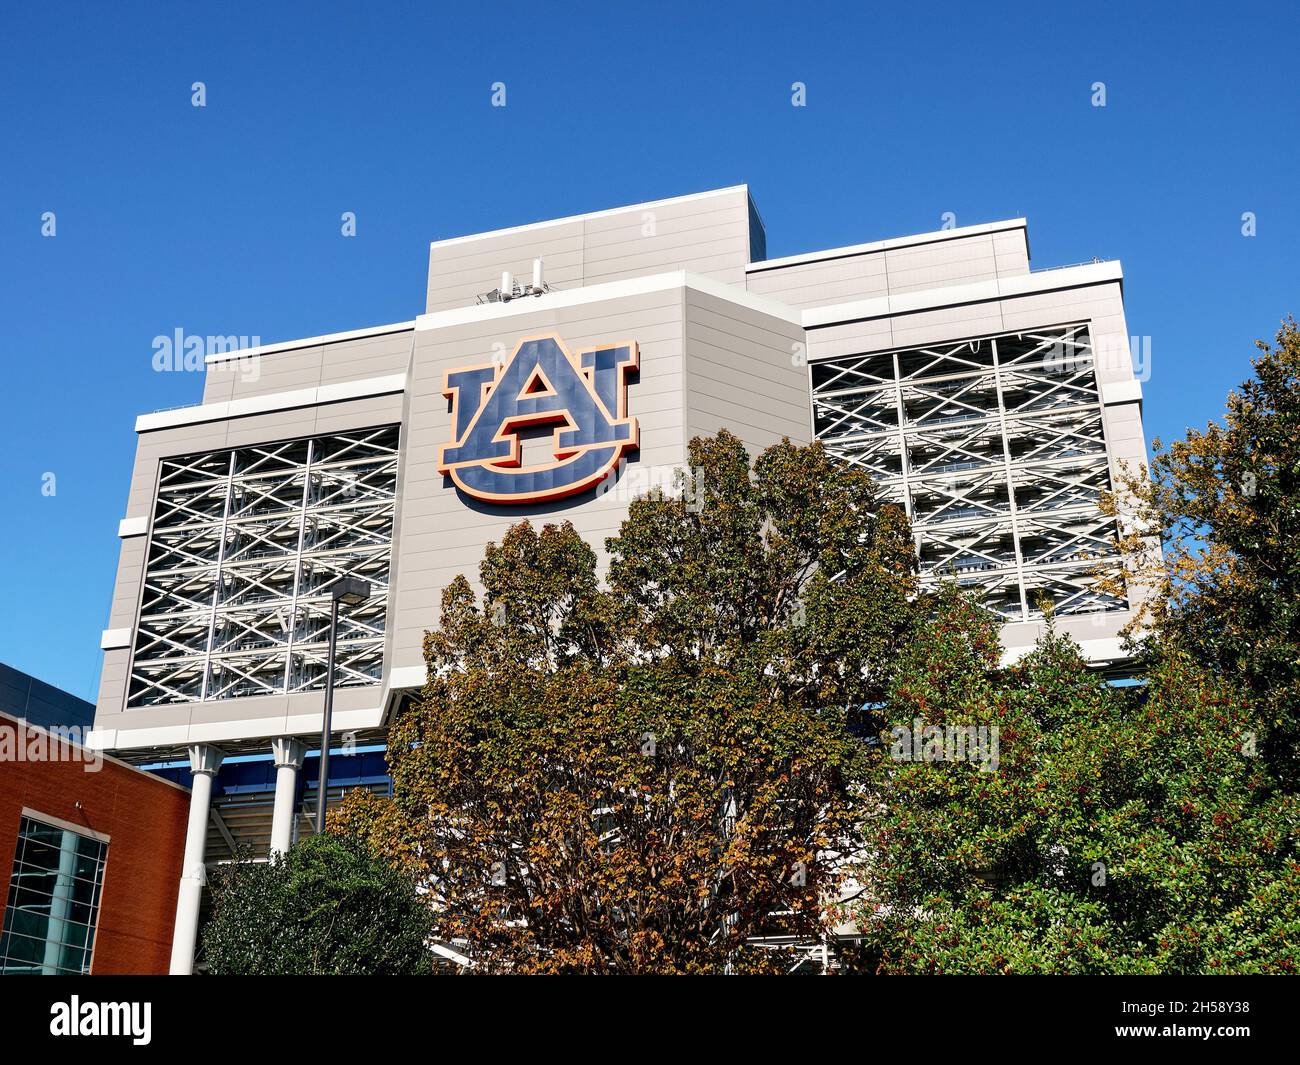 Auburn University Jordan-Hare football stadium exterior entrance with the Auburn Tigers logo in Auburn Alabama, USA. Stock Photo